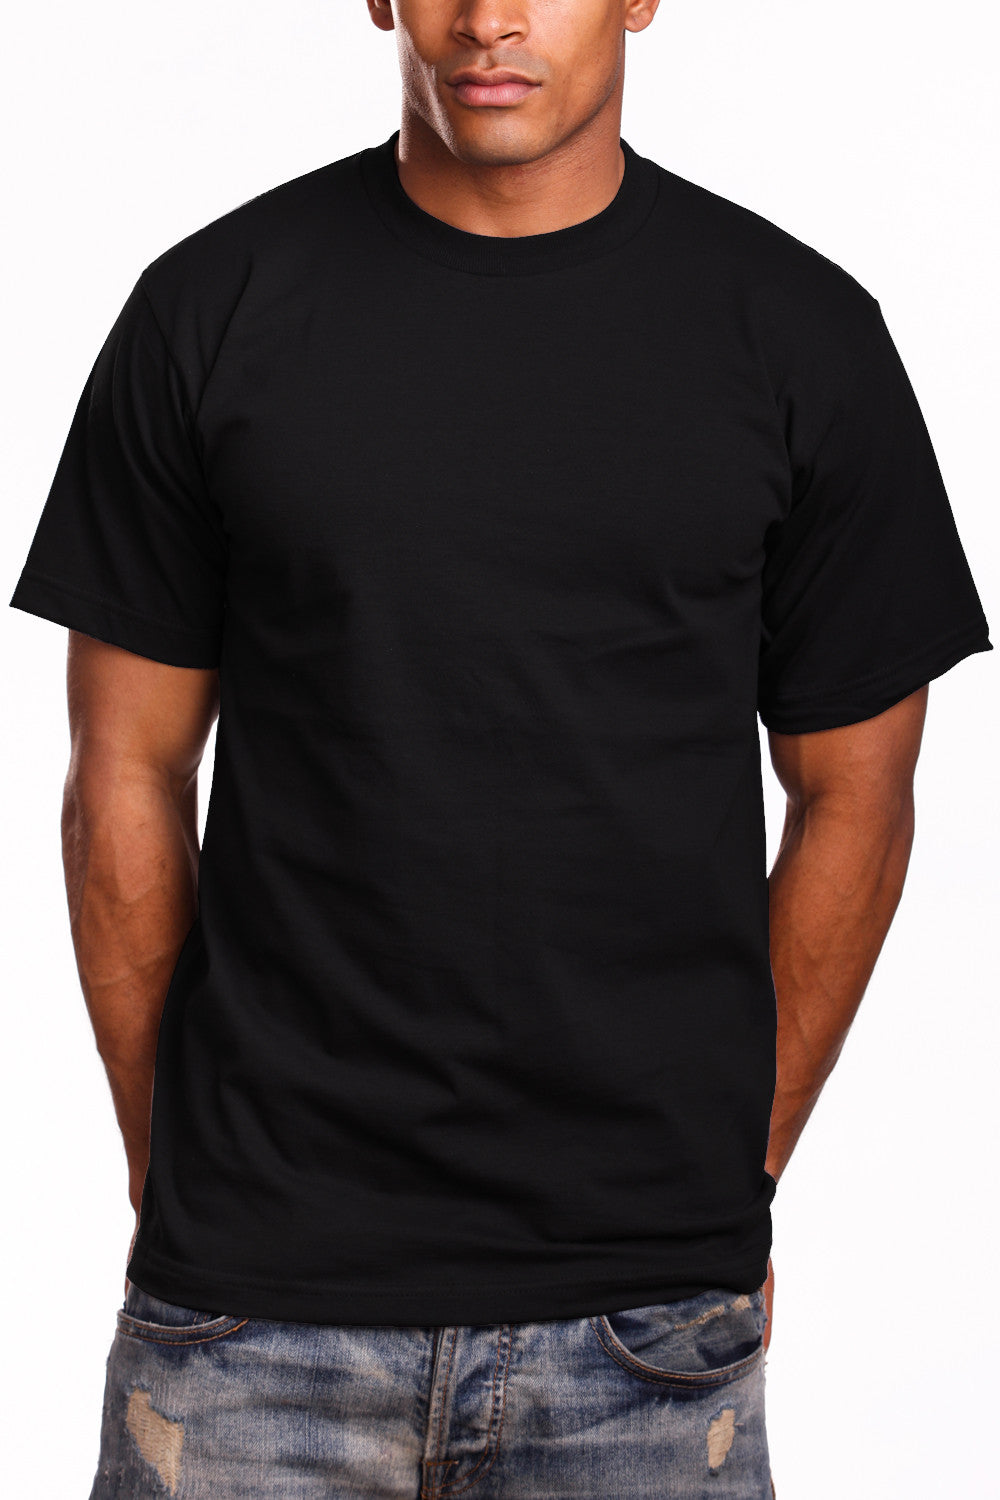 Pro Player Men's T-Shirt - Black - L